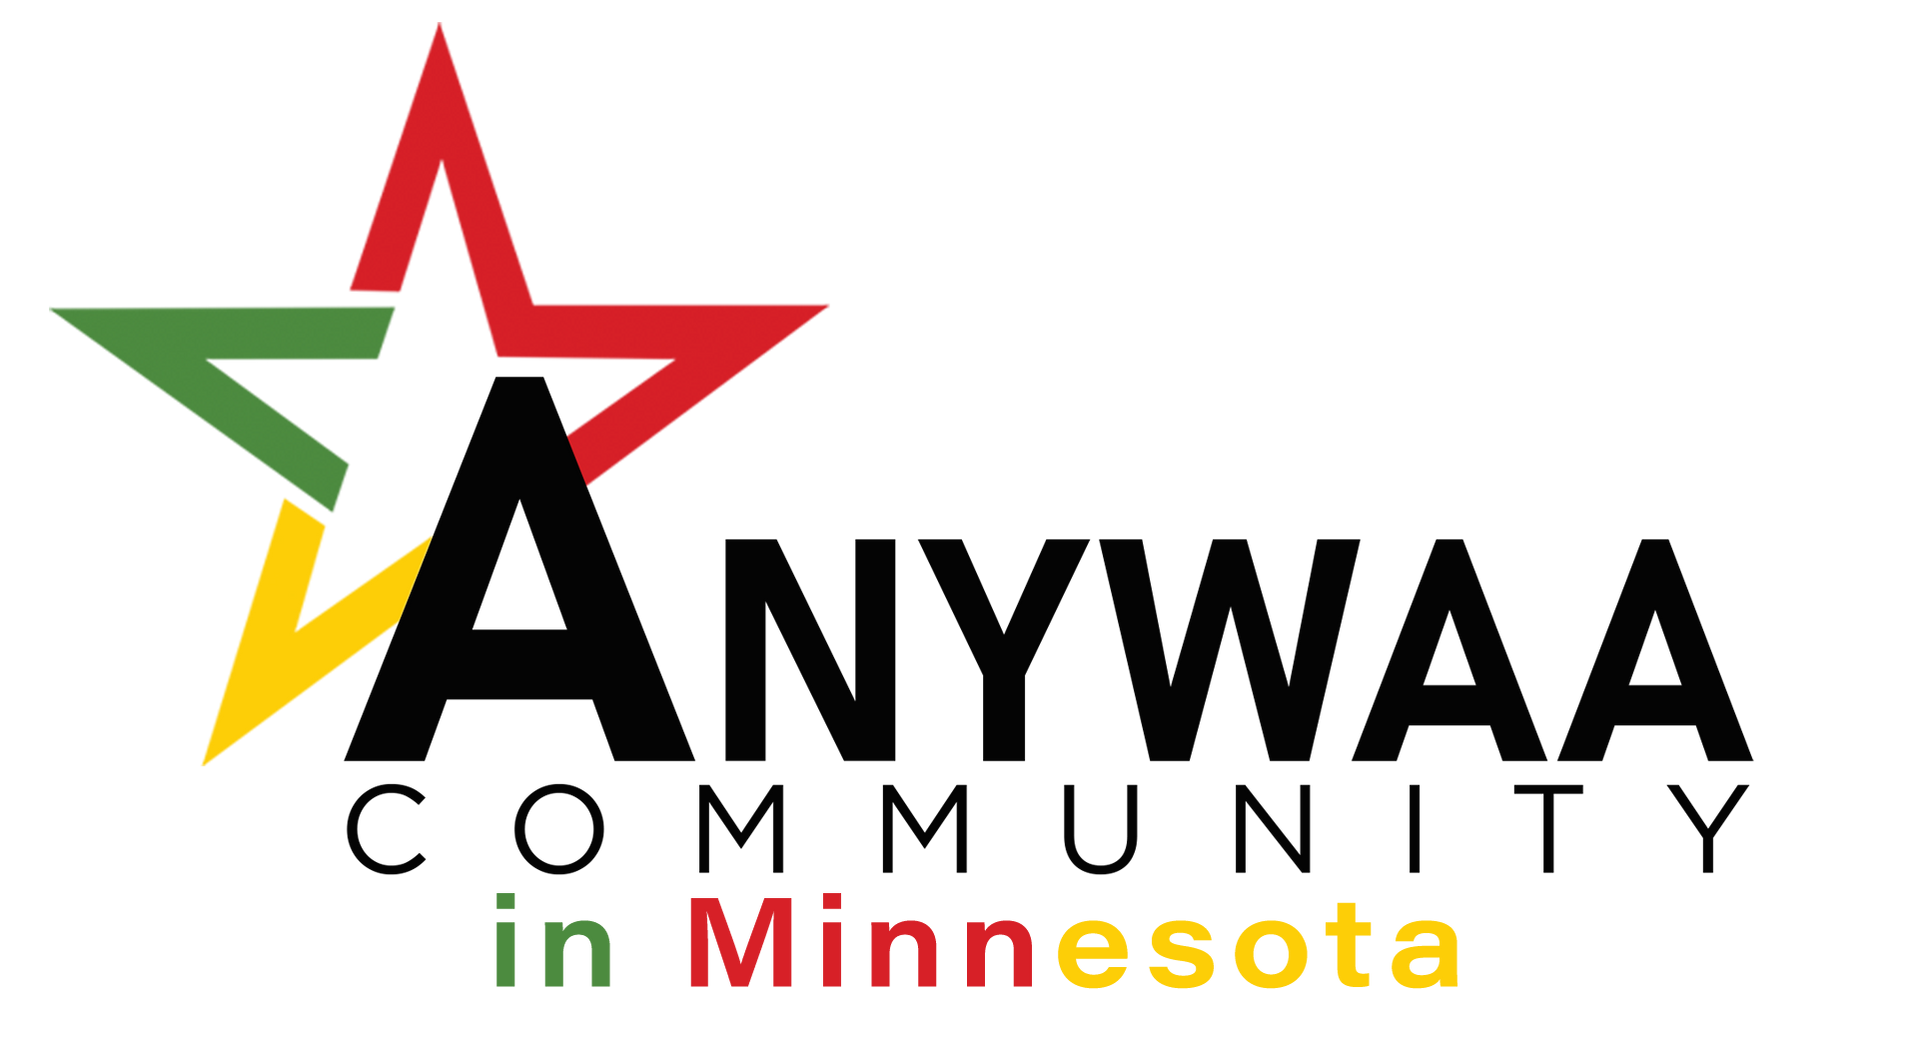 Anywaa community in Minnesota